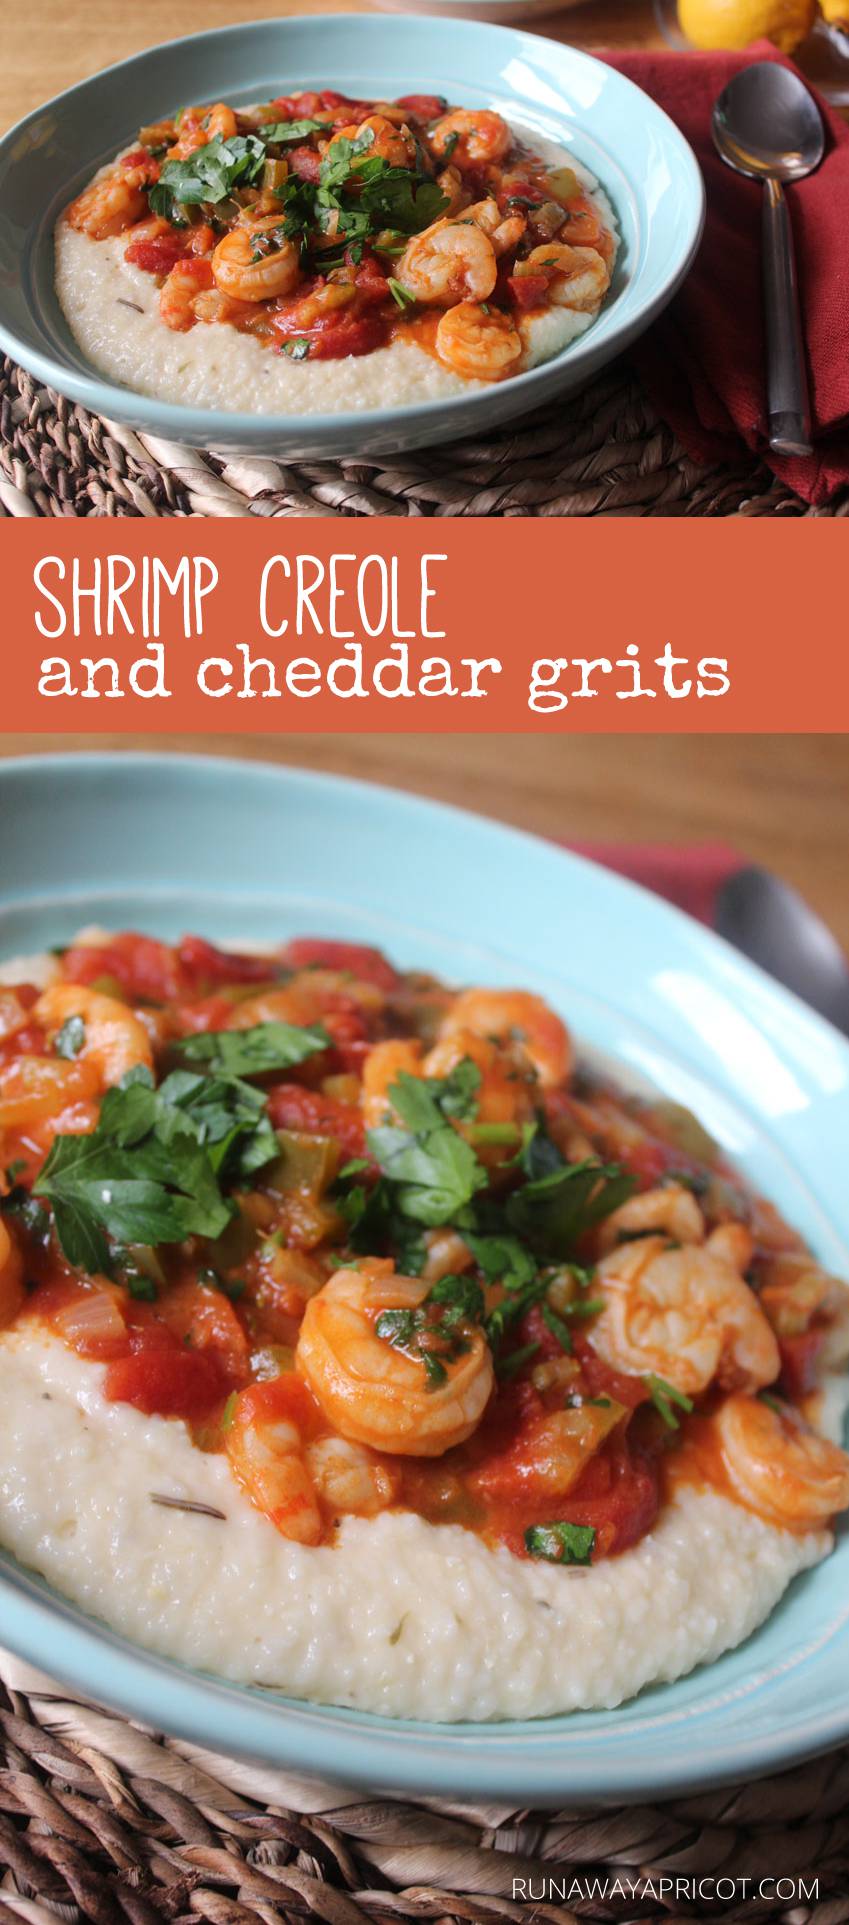 pappadeaux shrimp creole and grits recipe